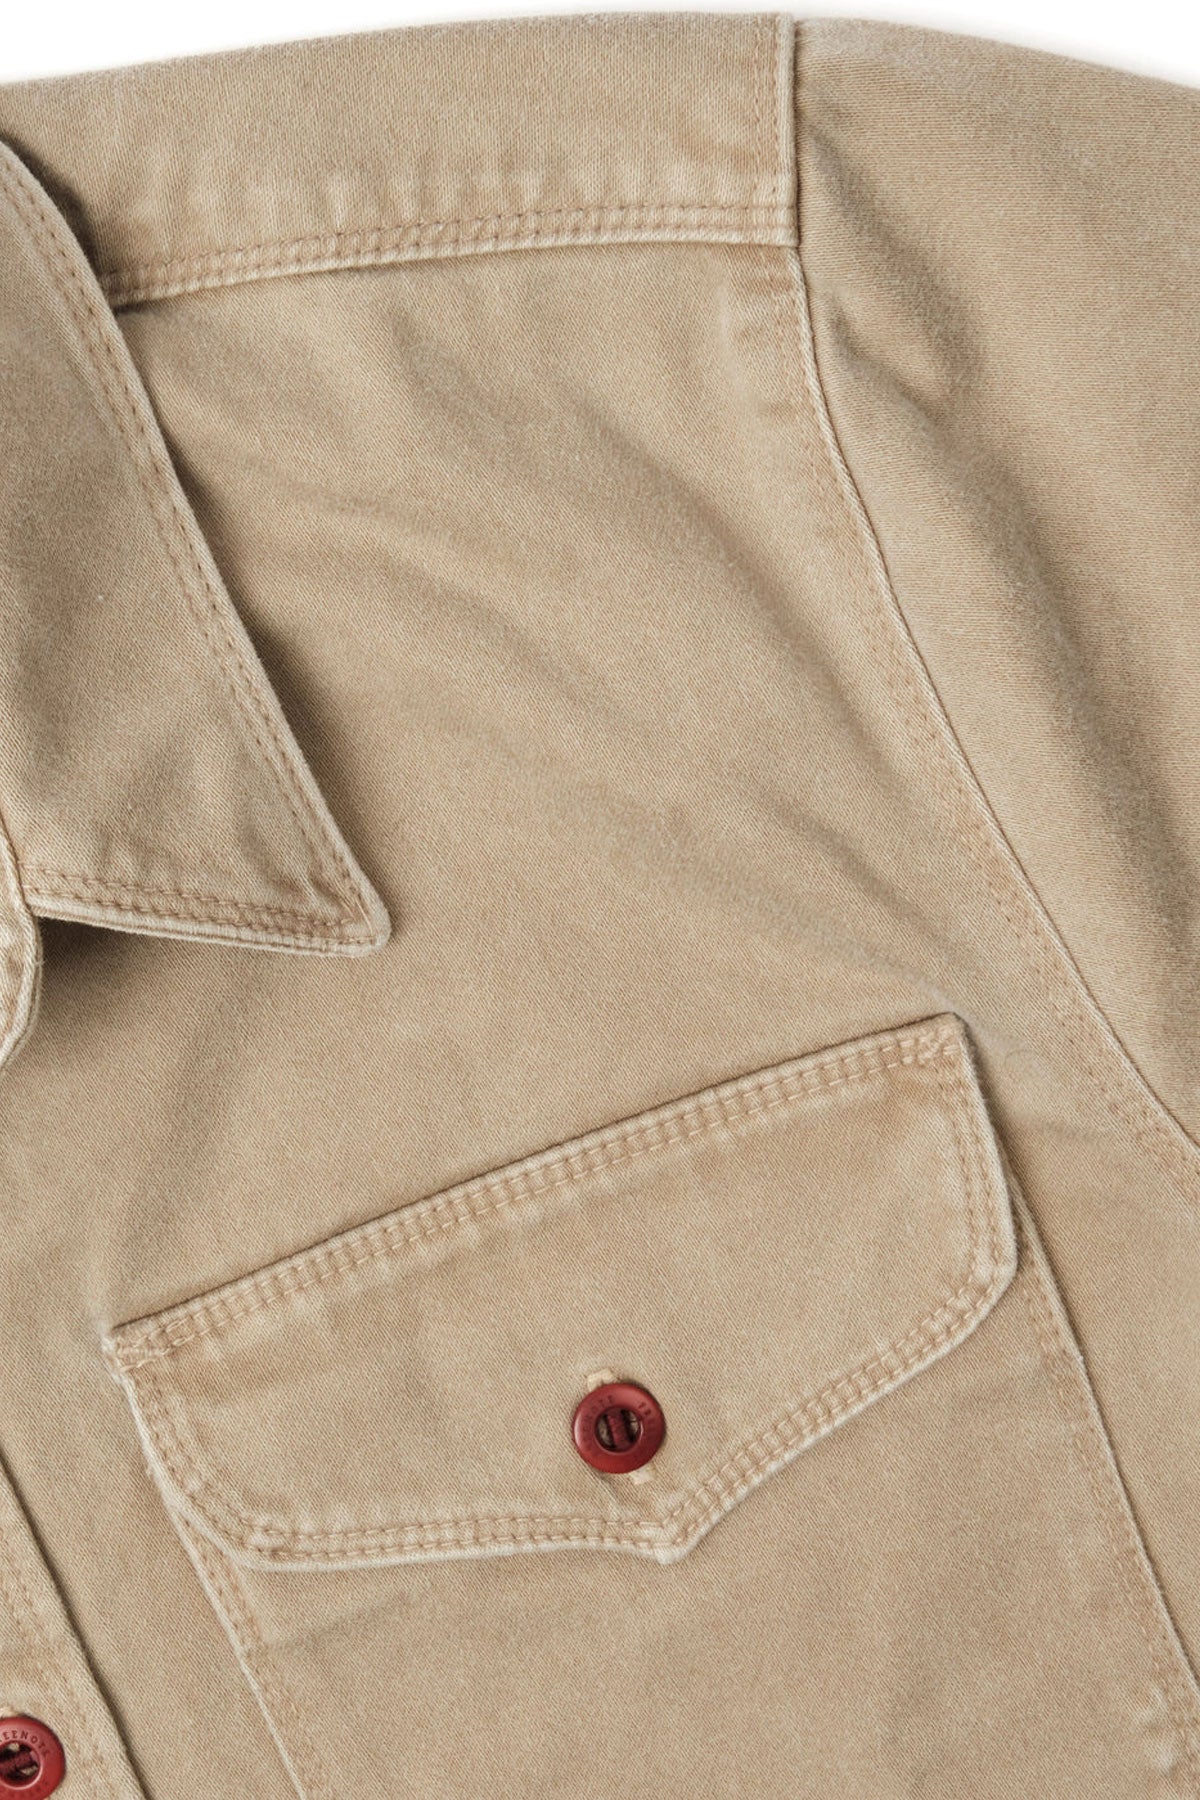 Freenote Cloth - Utility Shirt in Khaki